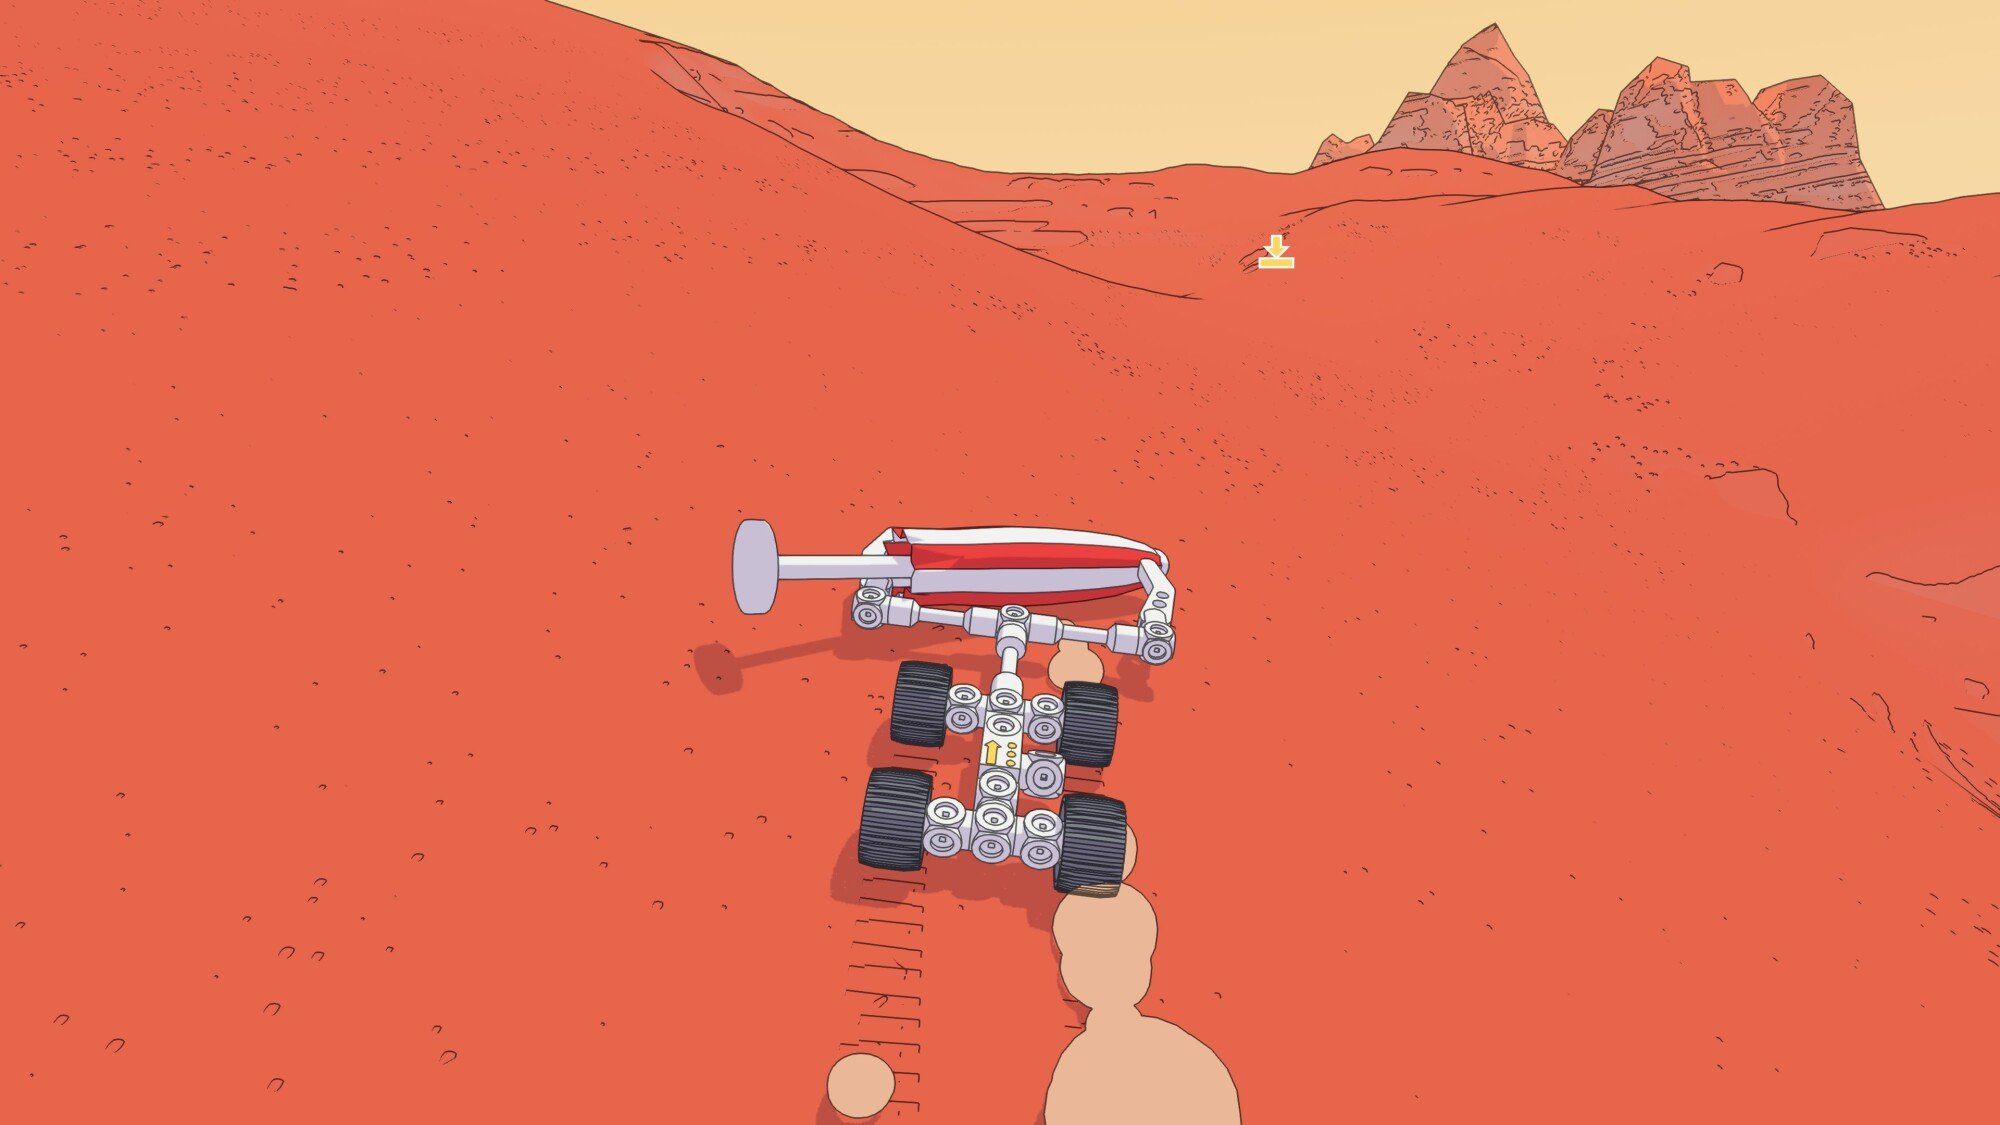 A Mars First Logistics screenshot. In it, a buggy pushes a closed umbrella across Mars.